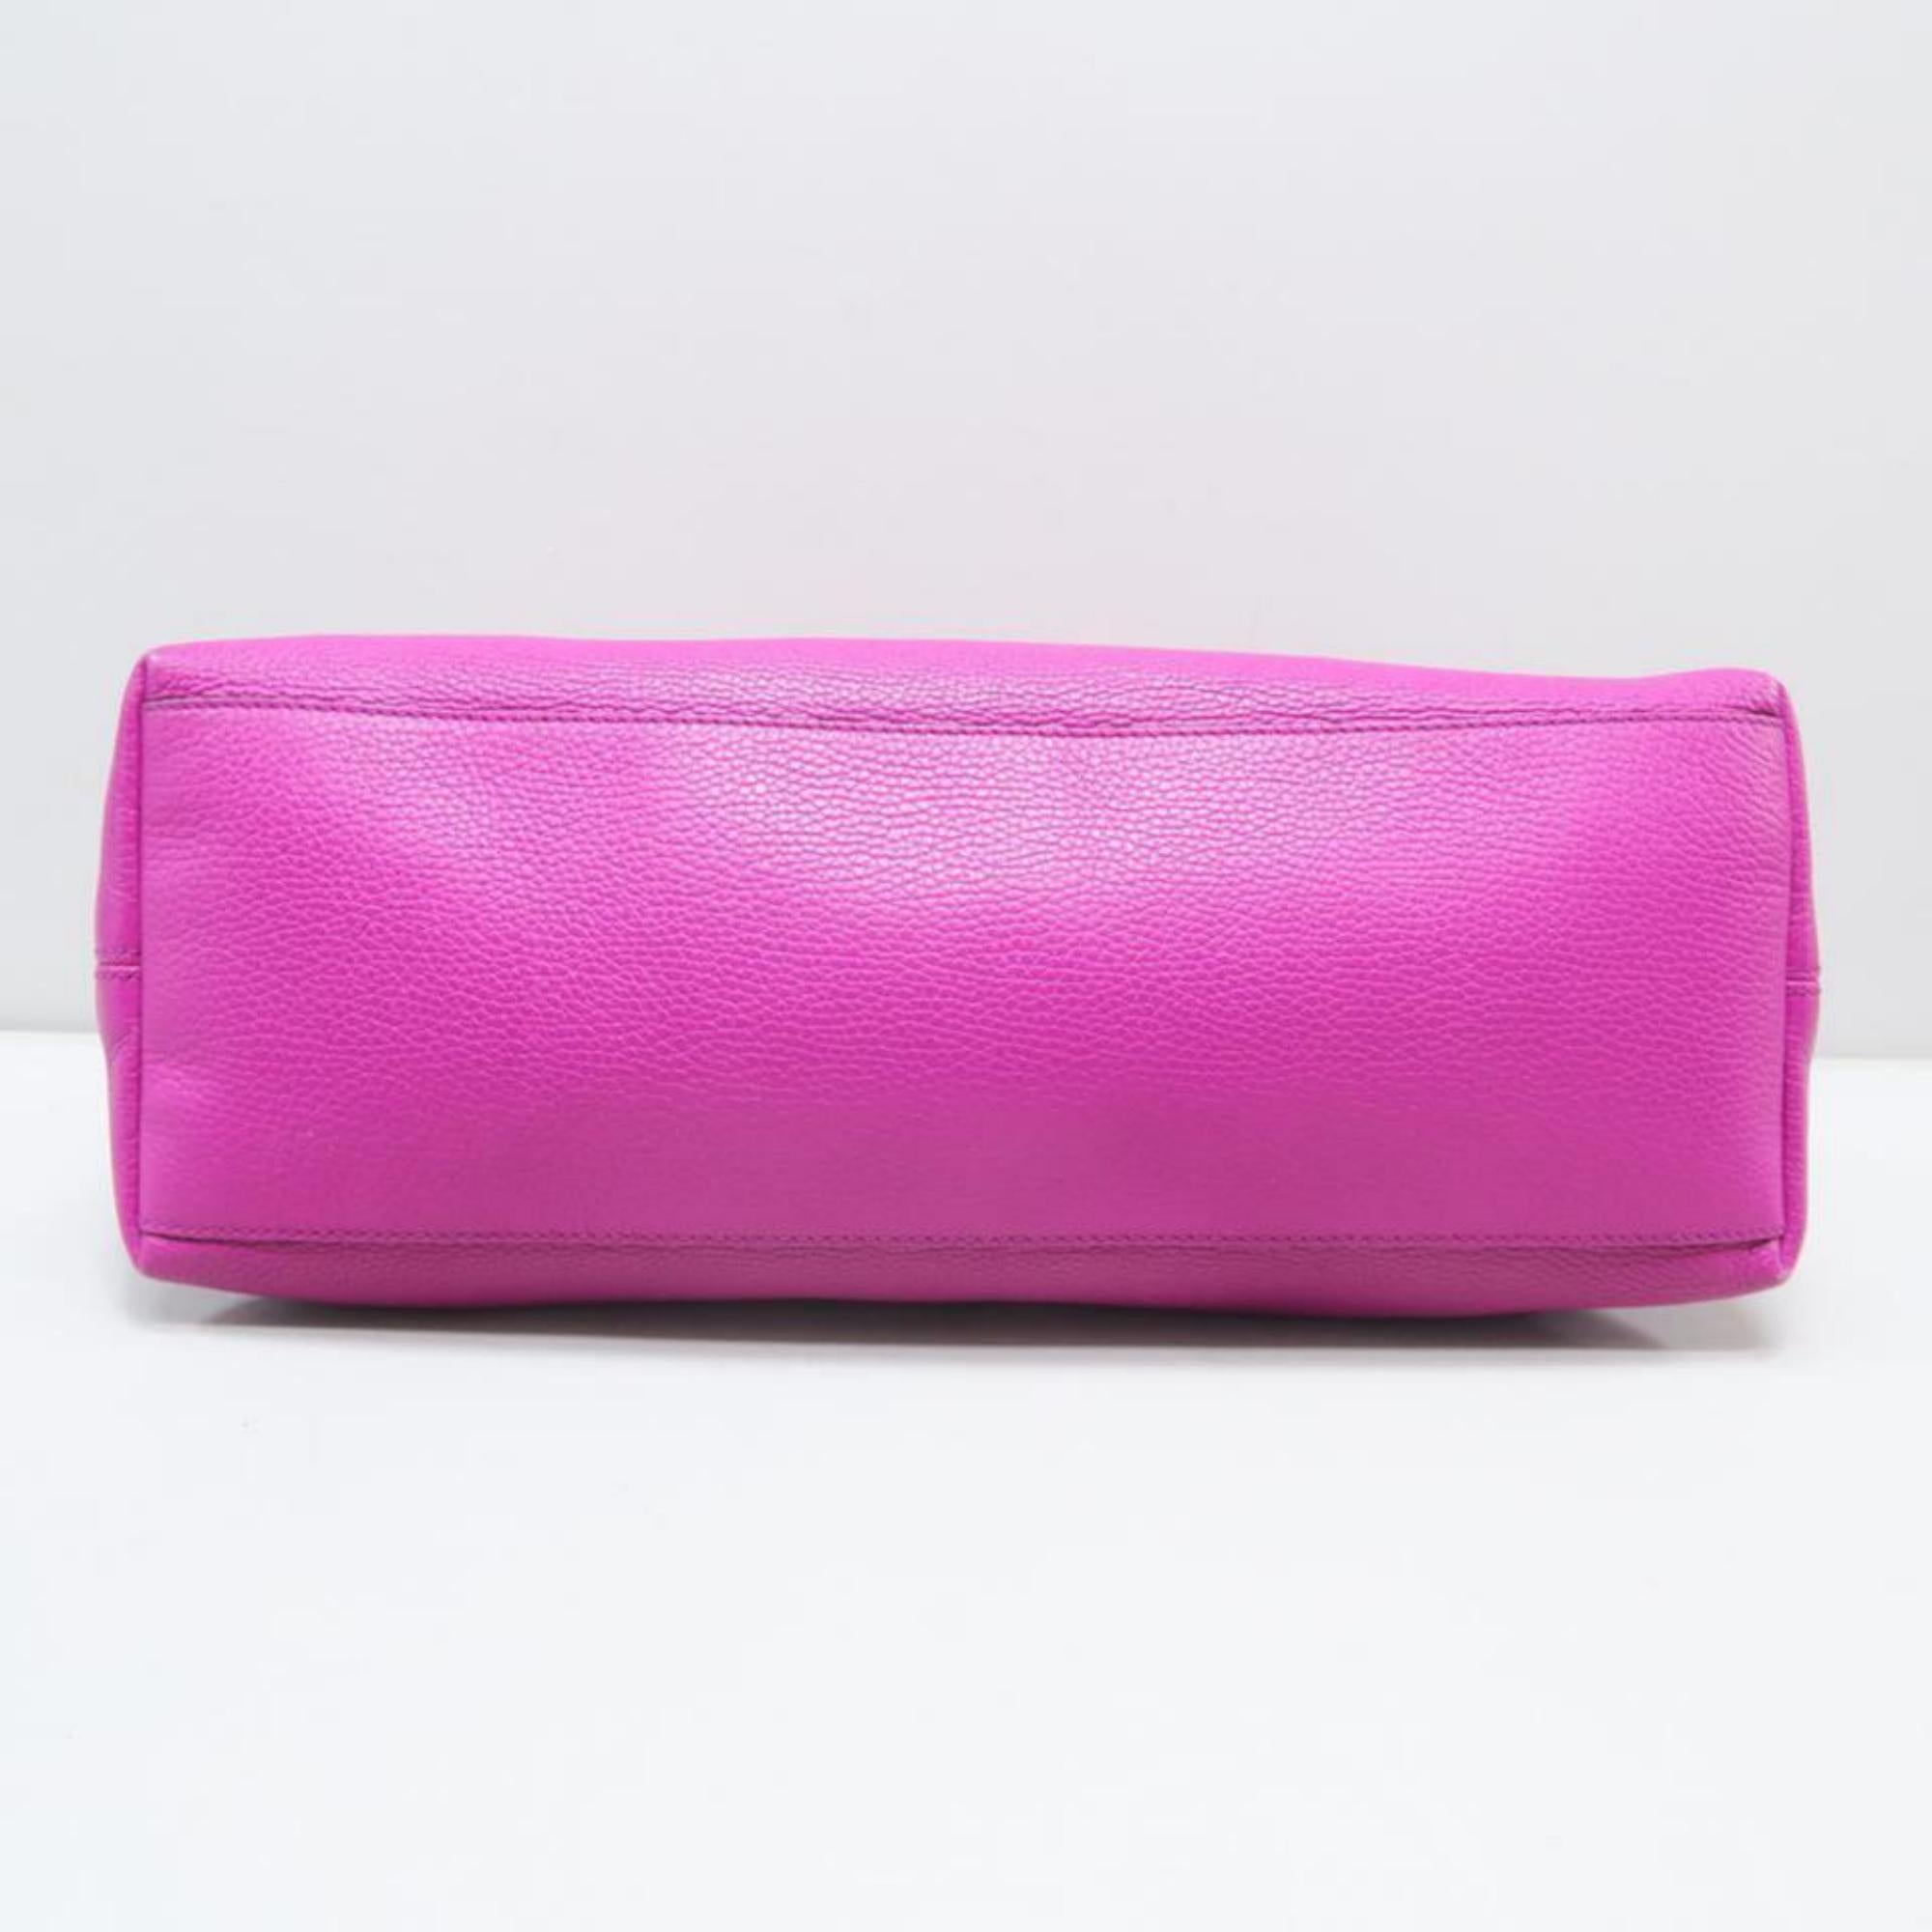 Gucci Soho Fringe Tassel Fuchsia Chain Tote 869084 Pink Leather Shoulder Bag 8